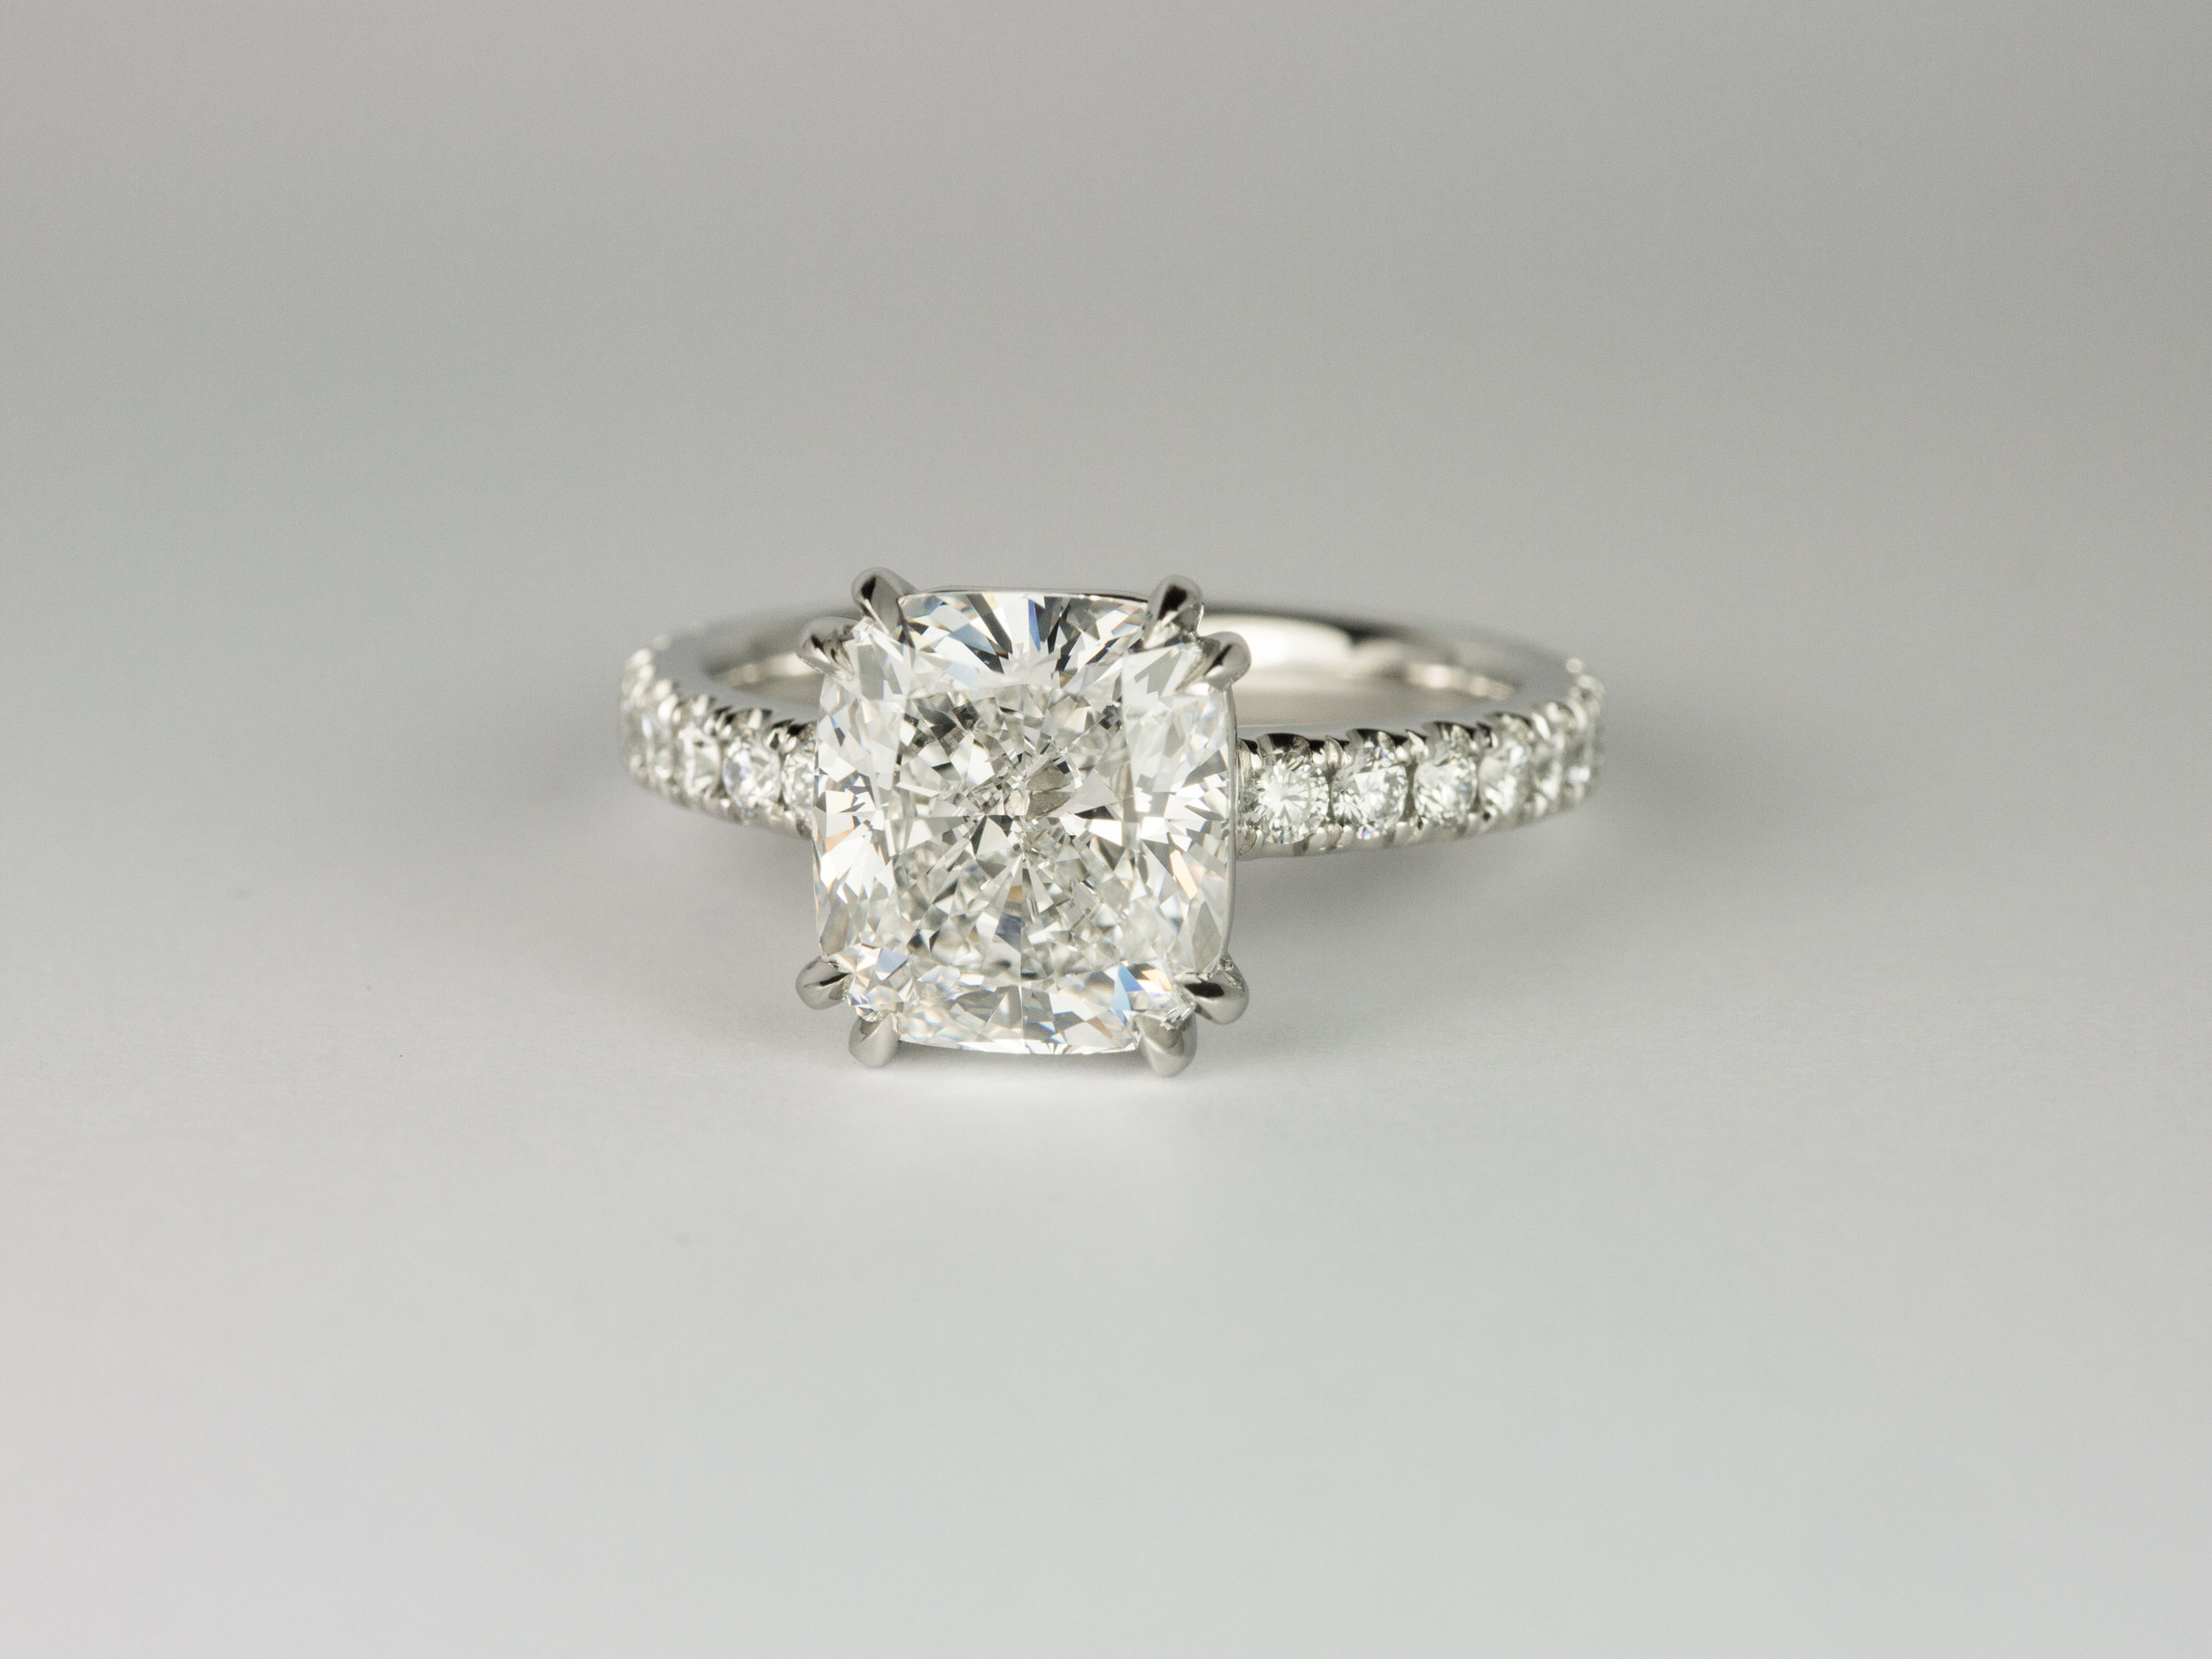  Cushion cut diamond engagement ring 